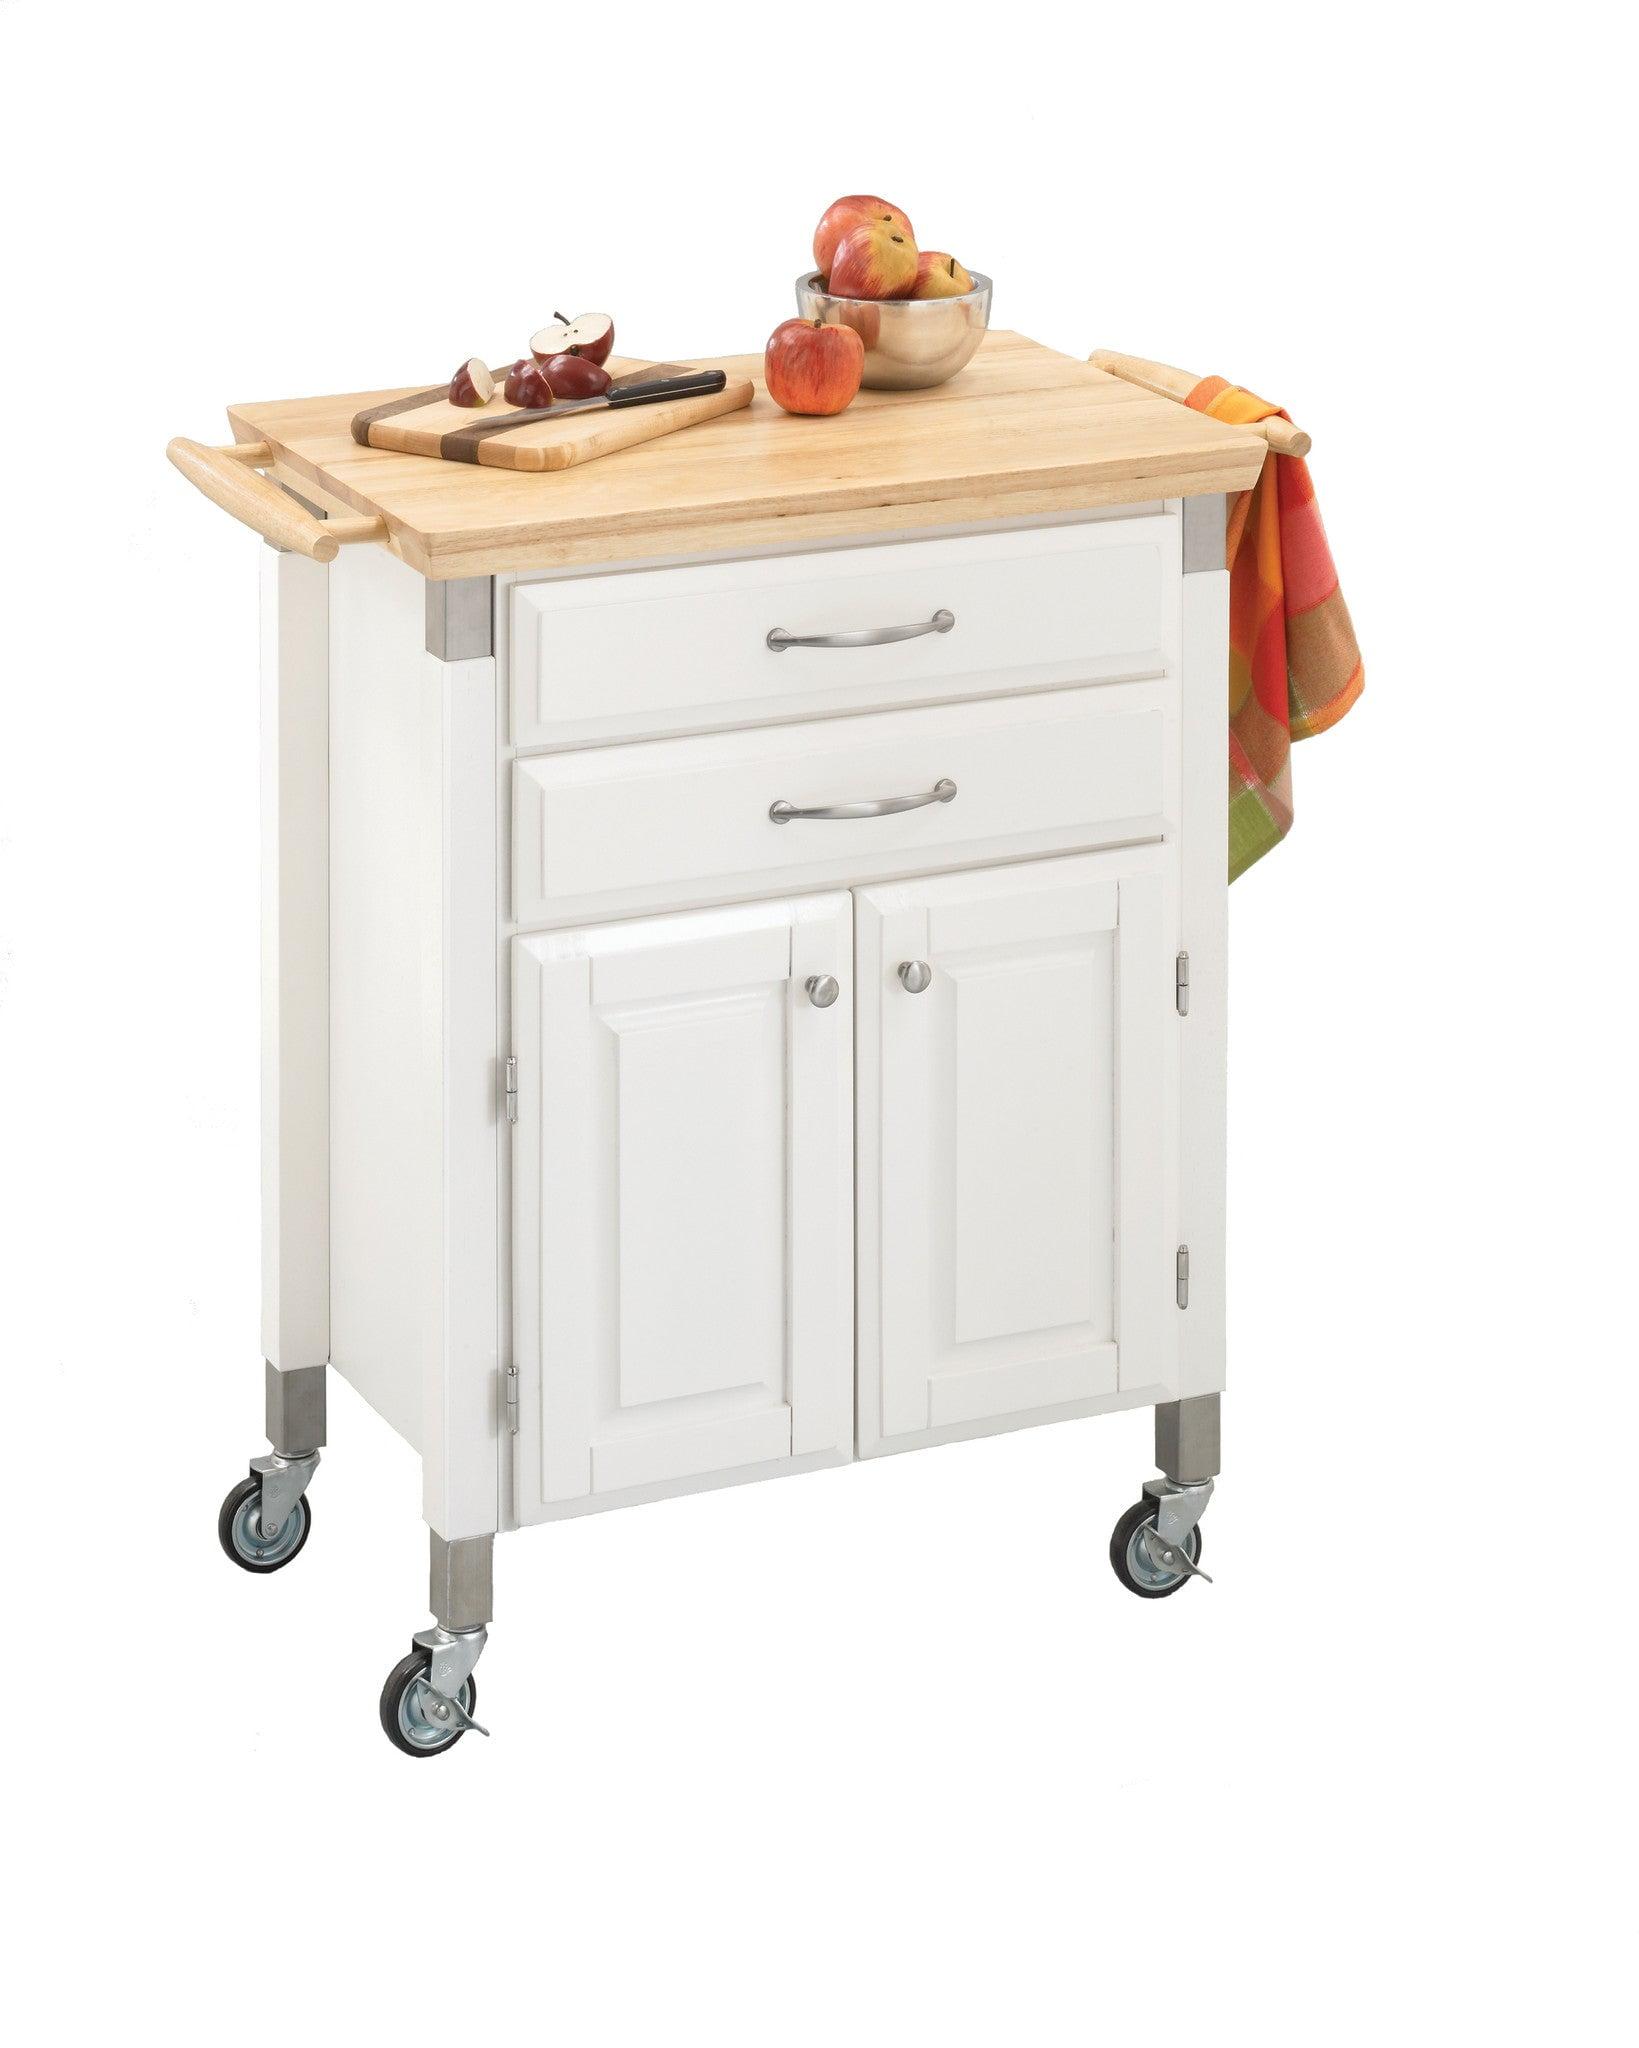 Classic White Butcher Block Kitchen Cart with Storage, 36"x11.75"